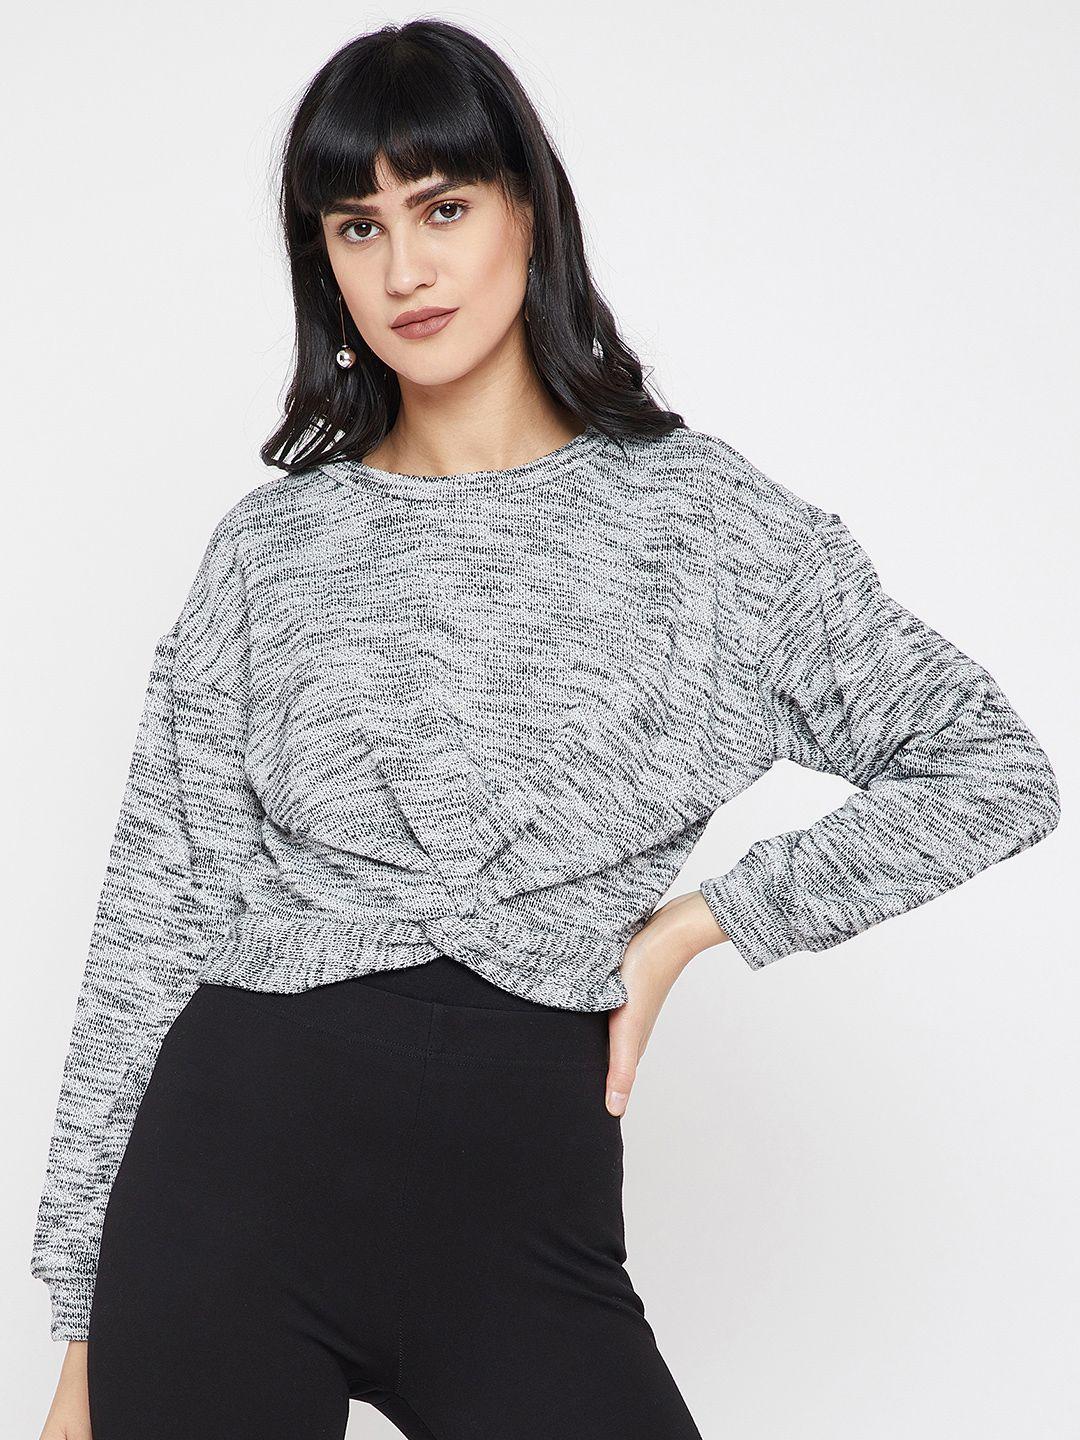 carlton-london-women-black-solid-sweatshirt